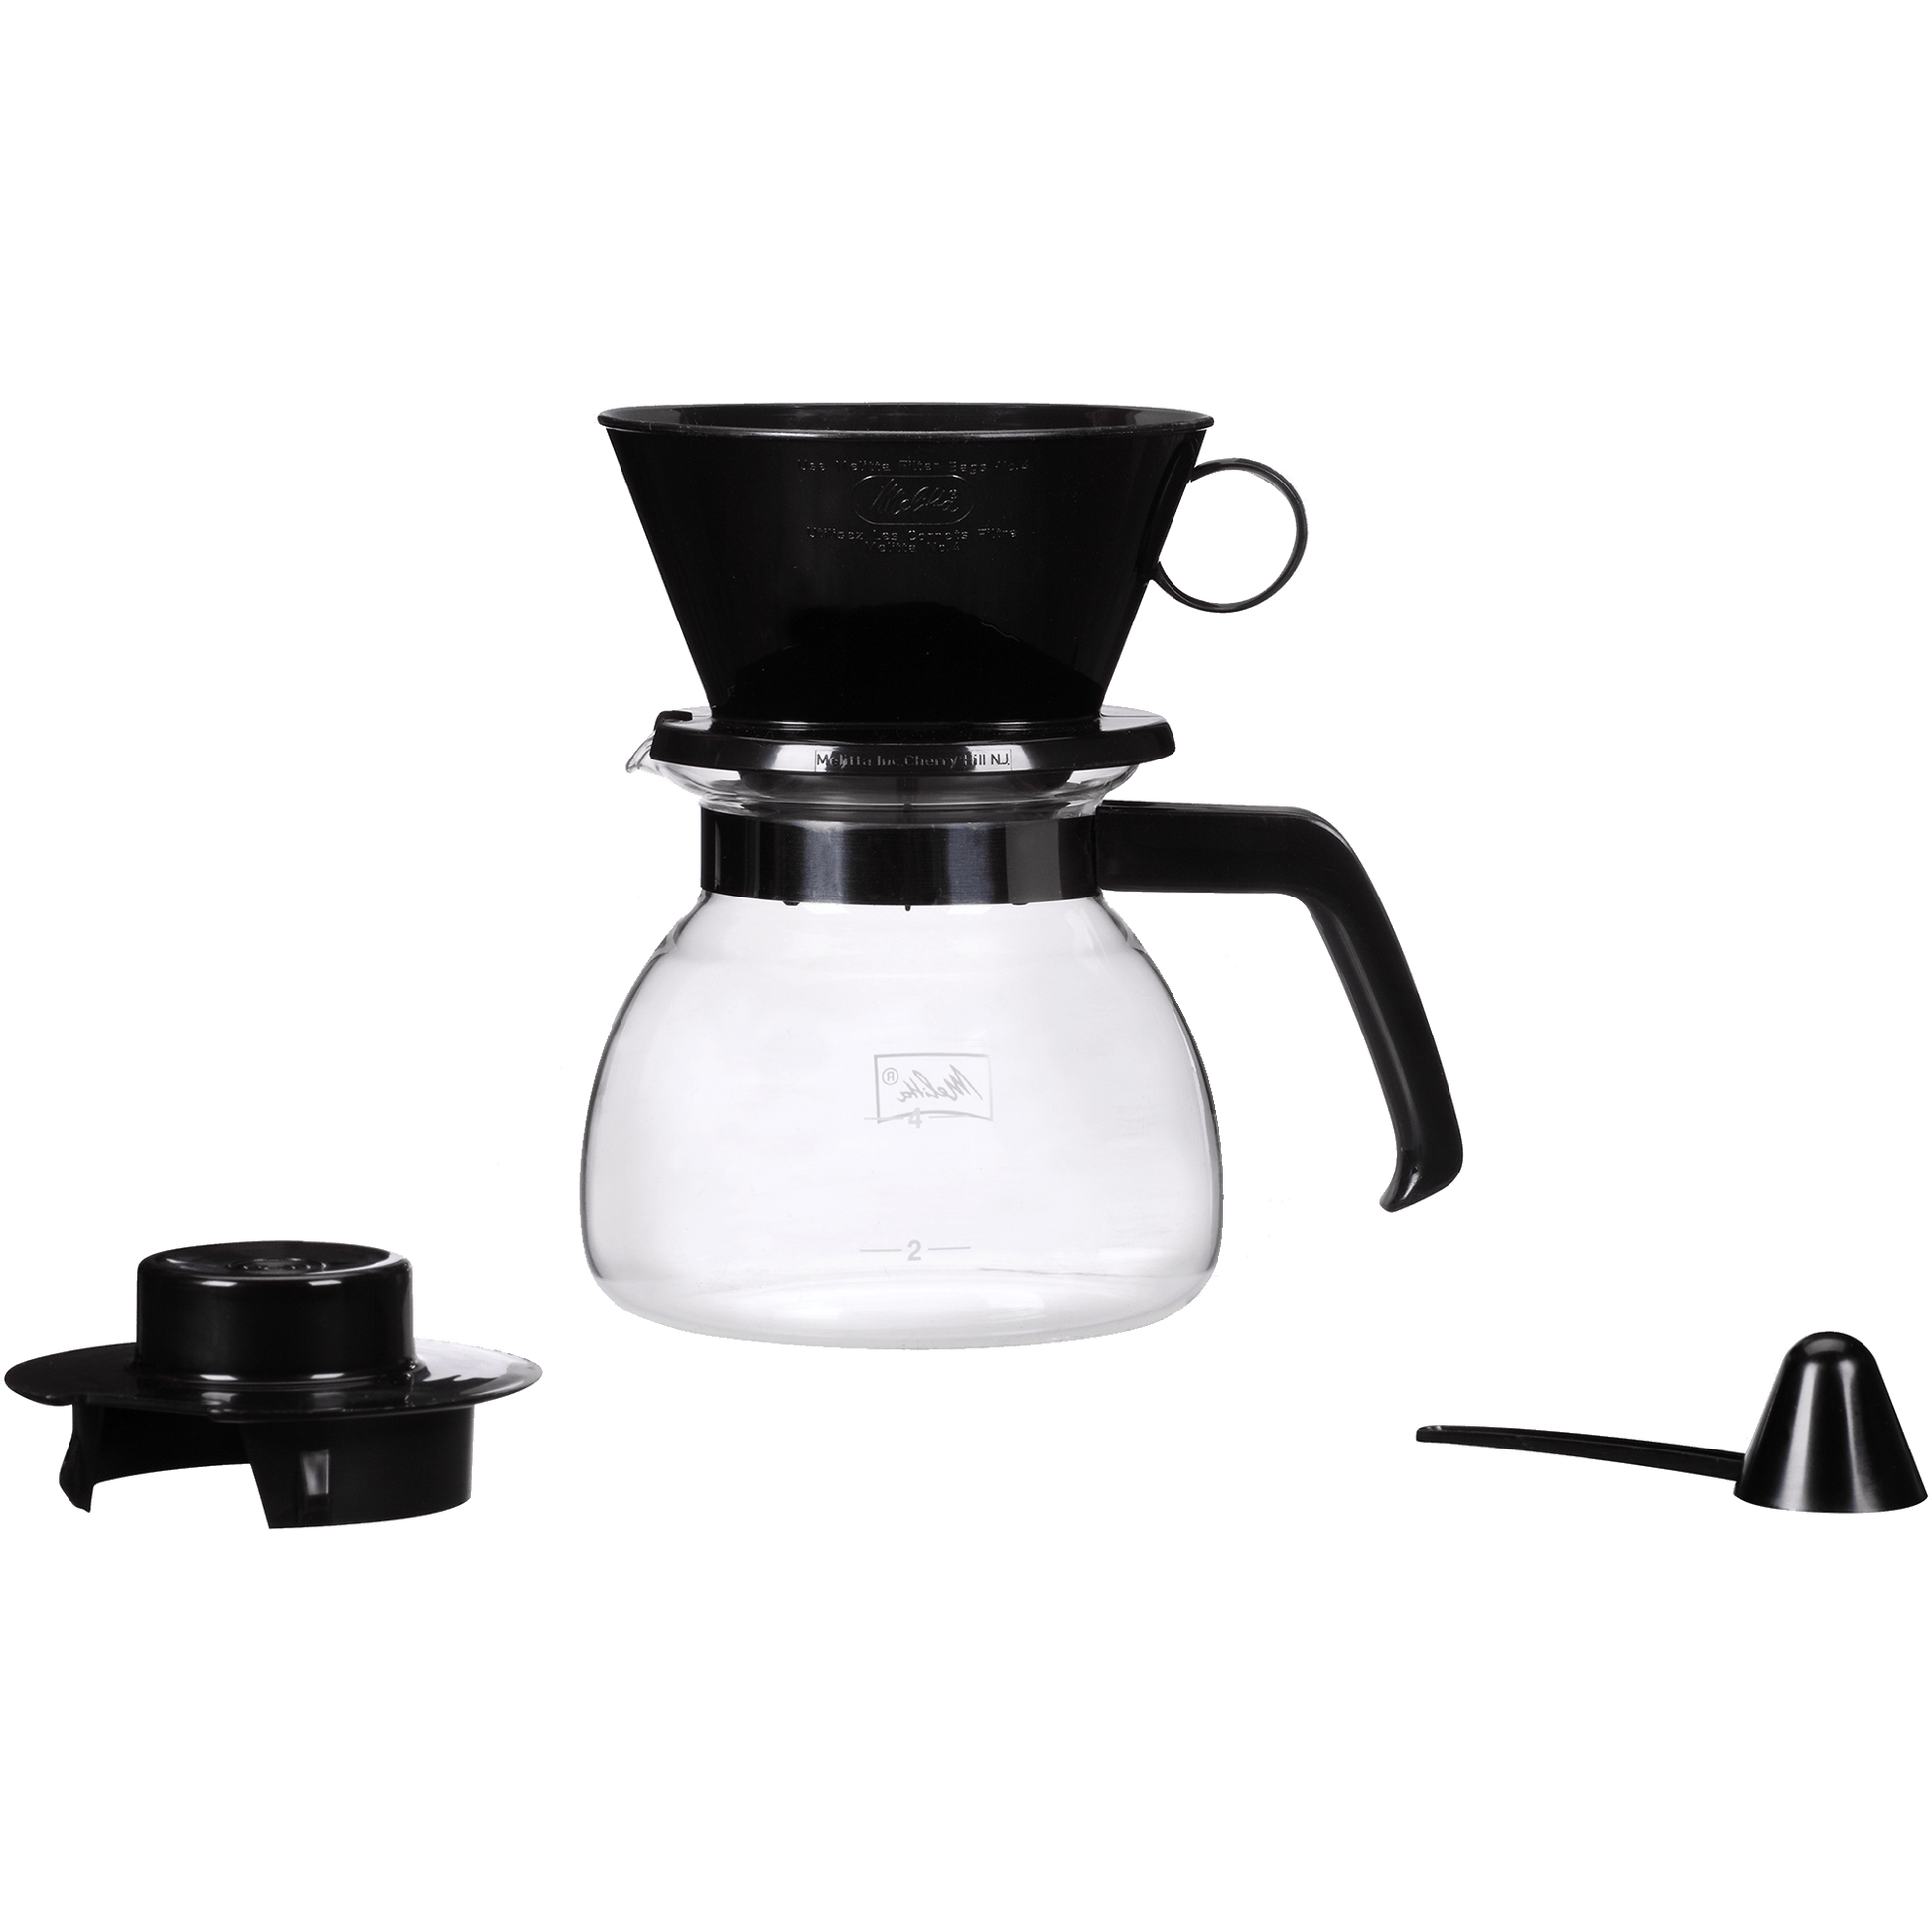 Melitta Perfect Clean Espresso Filter Coffee Machine Cleaner- 2 Packs  6545529X2 4006508178599